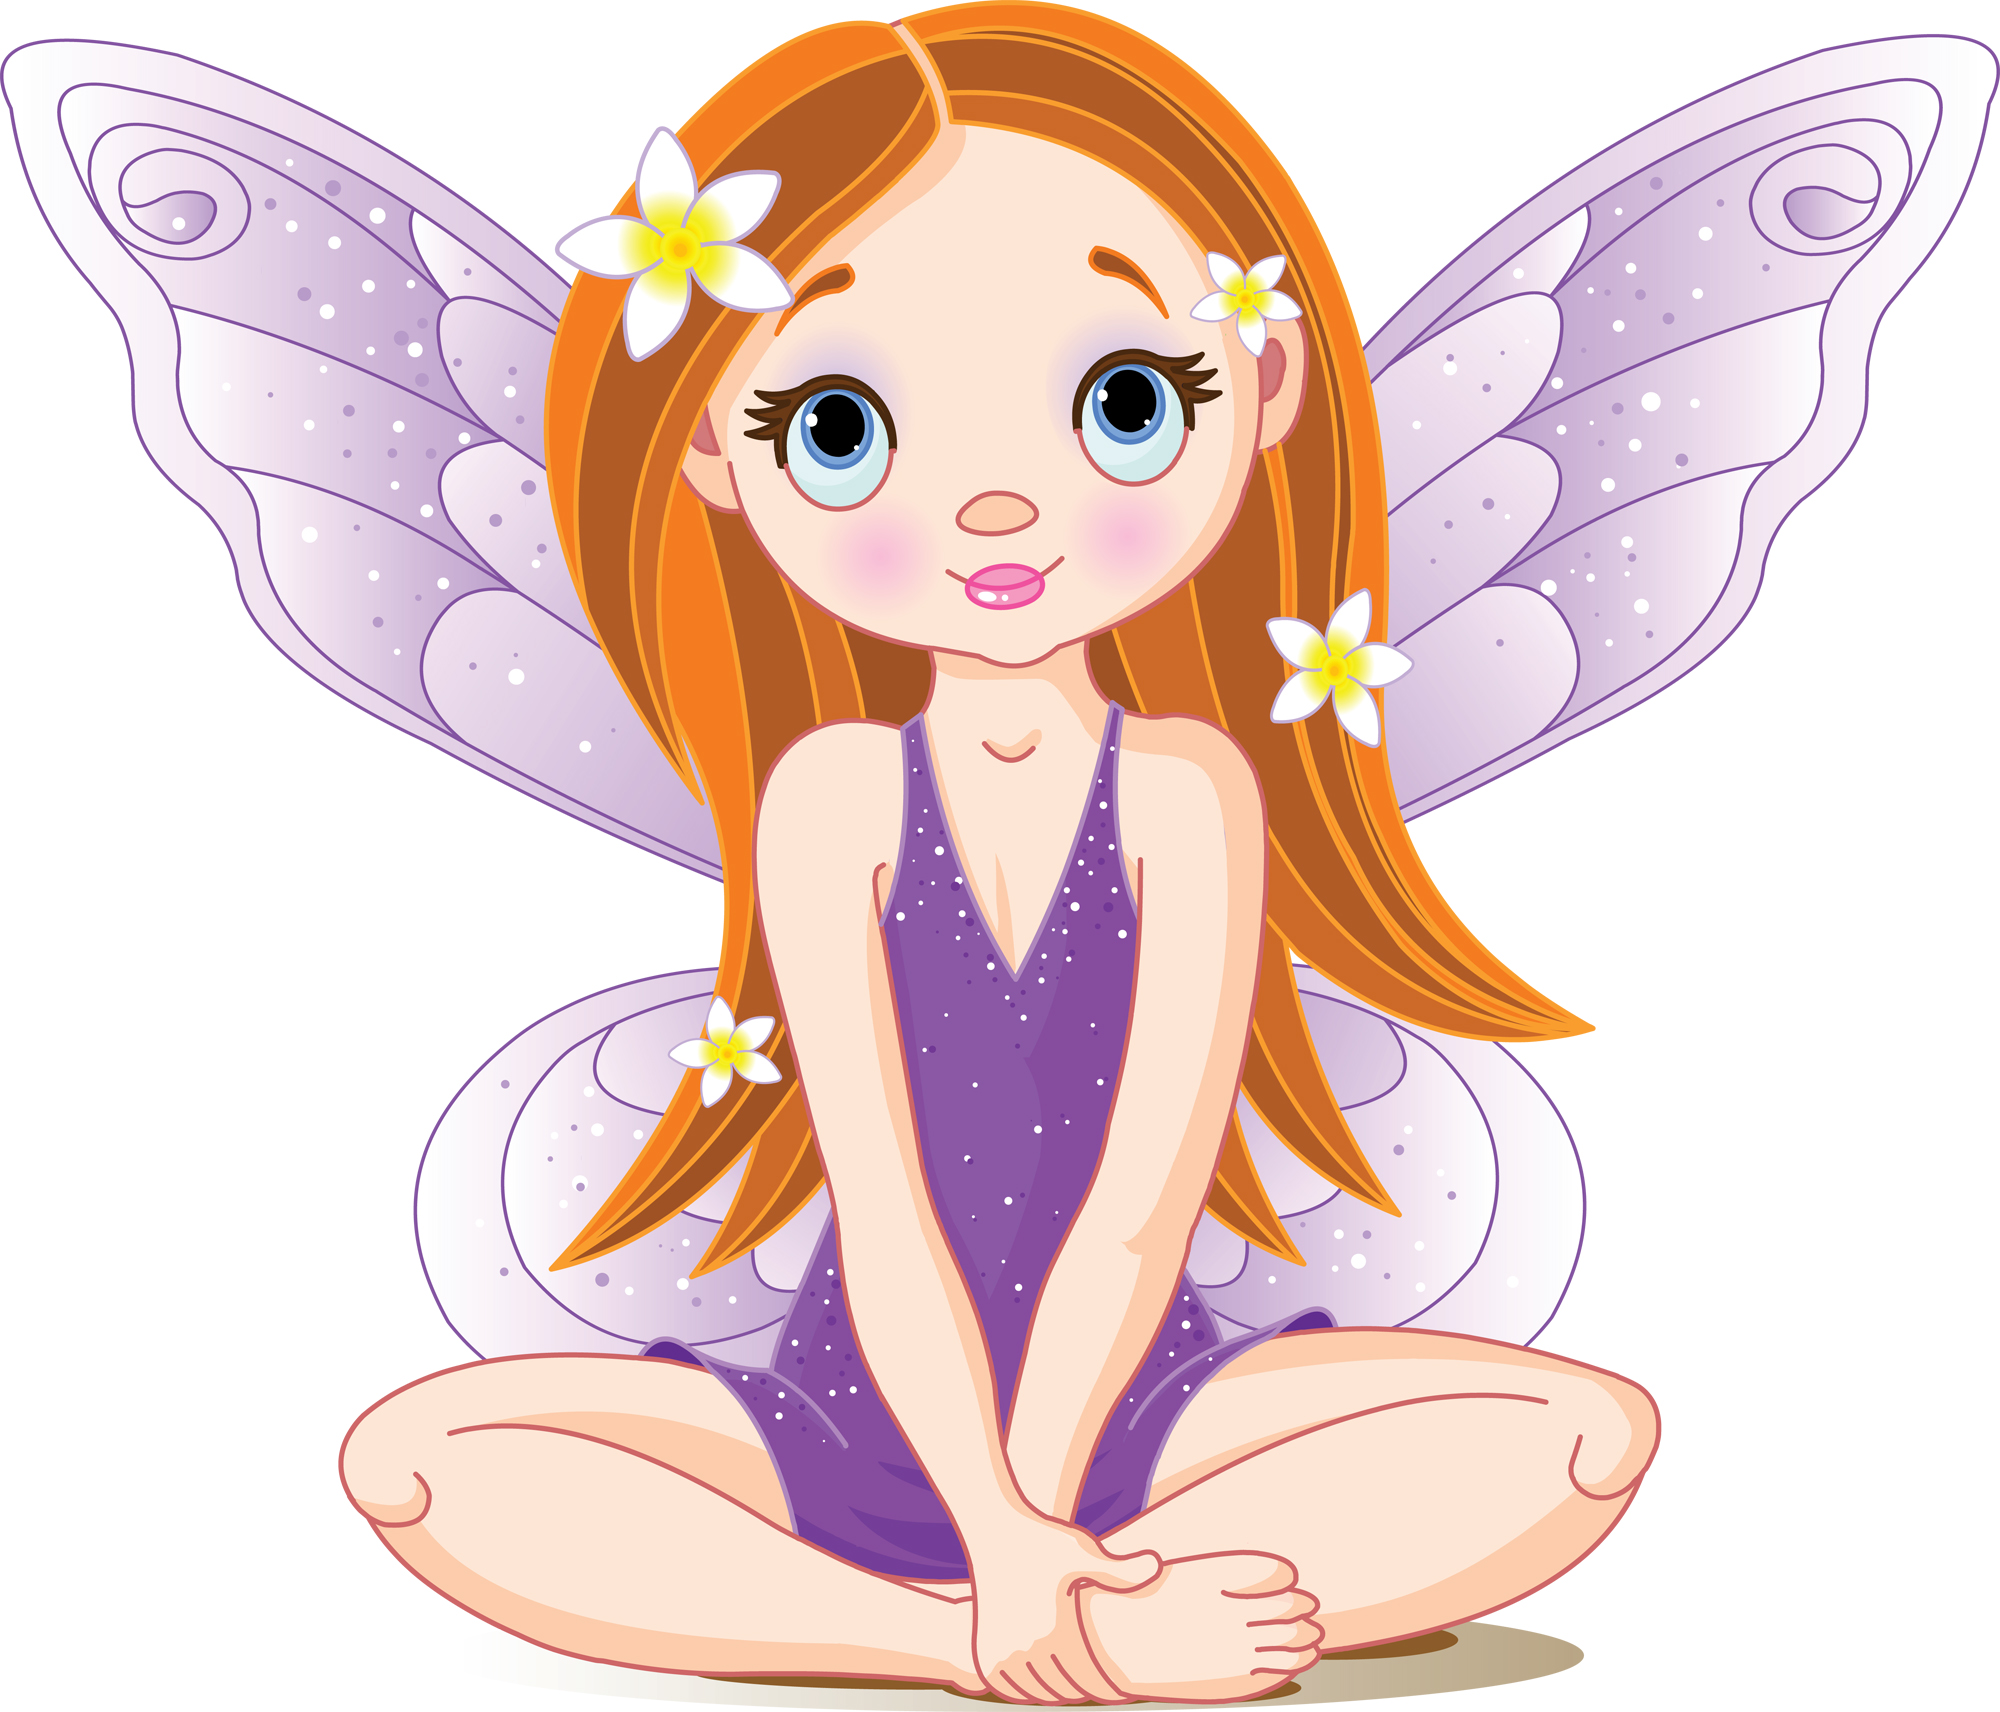 Does anyone speak “Fairy” around here? – Victoria Carlton ~ The Child